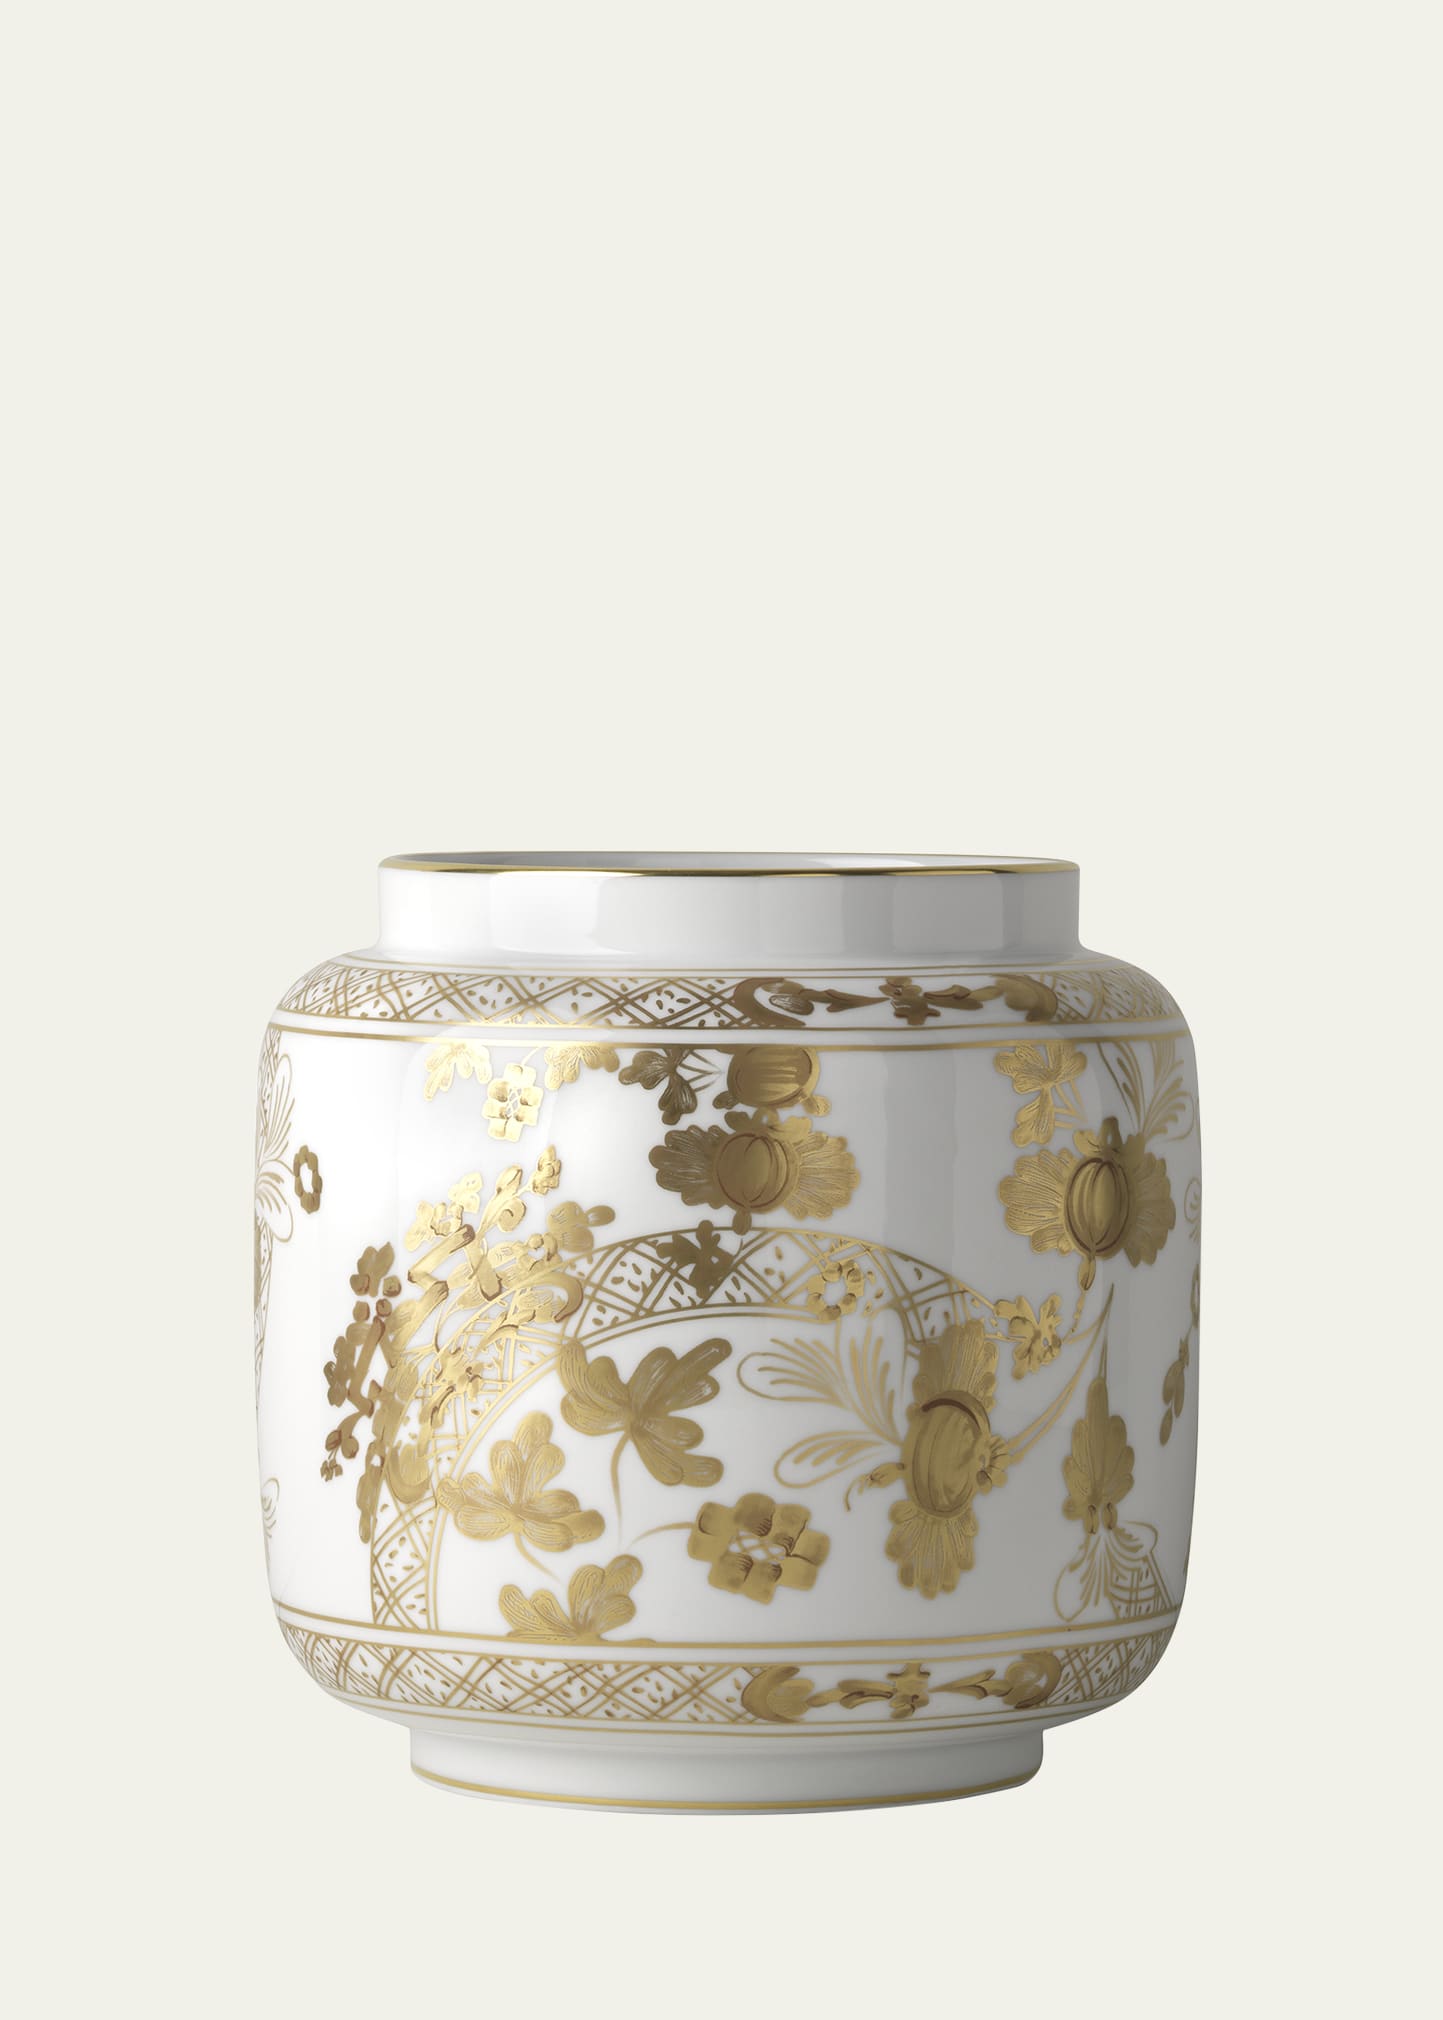 Oriente Italiano Aurum Stackable Vase